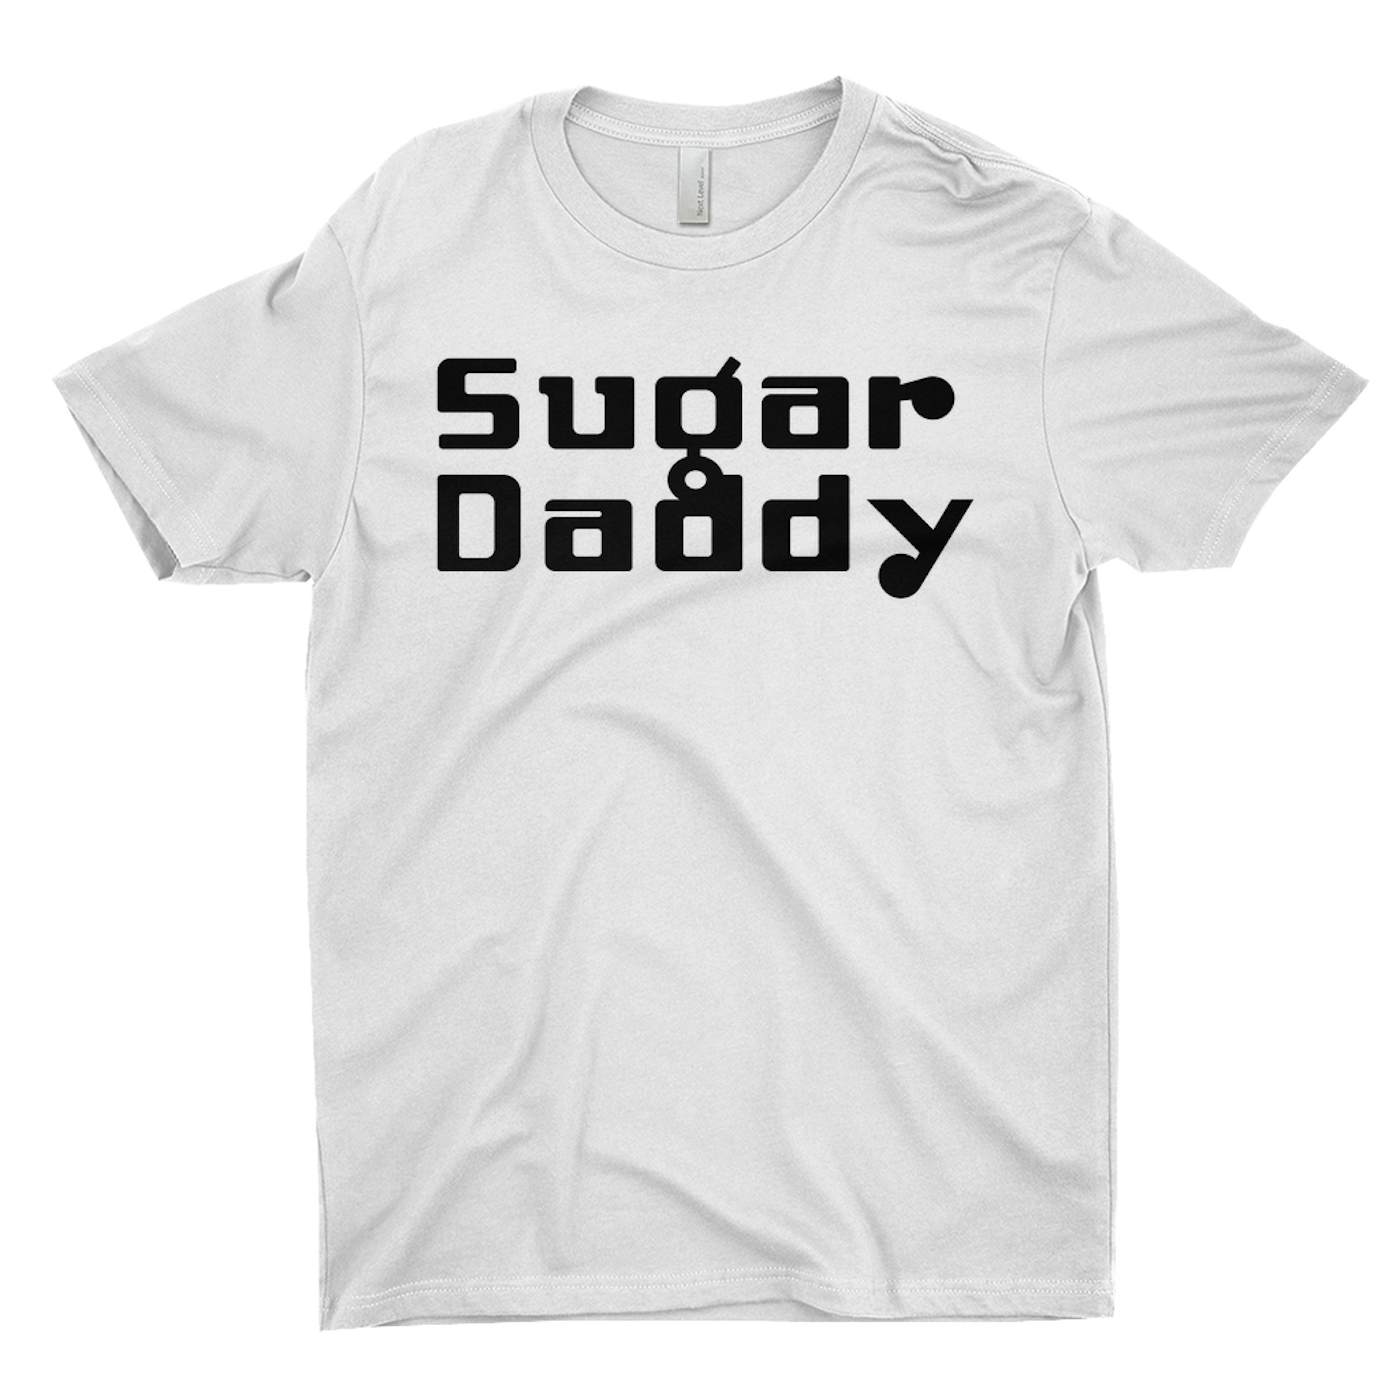 Ramones T-Shirt | Sugar Daddy Worn By Dee Dee Ramone Ramones Shirt